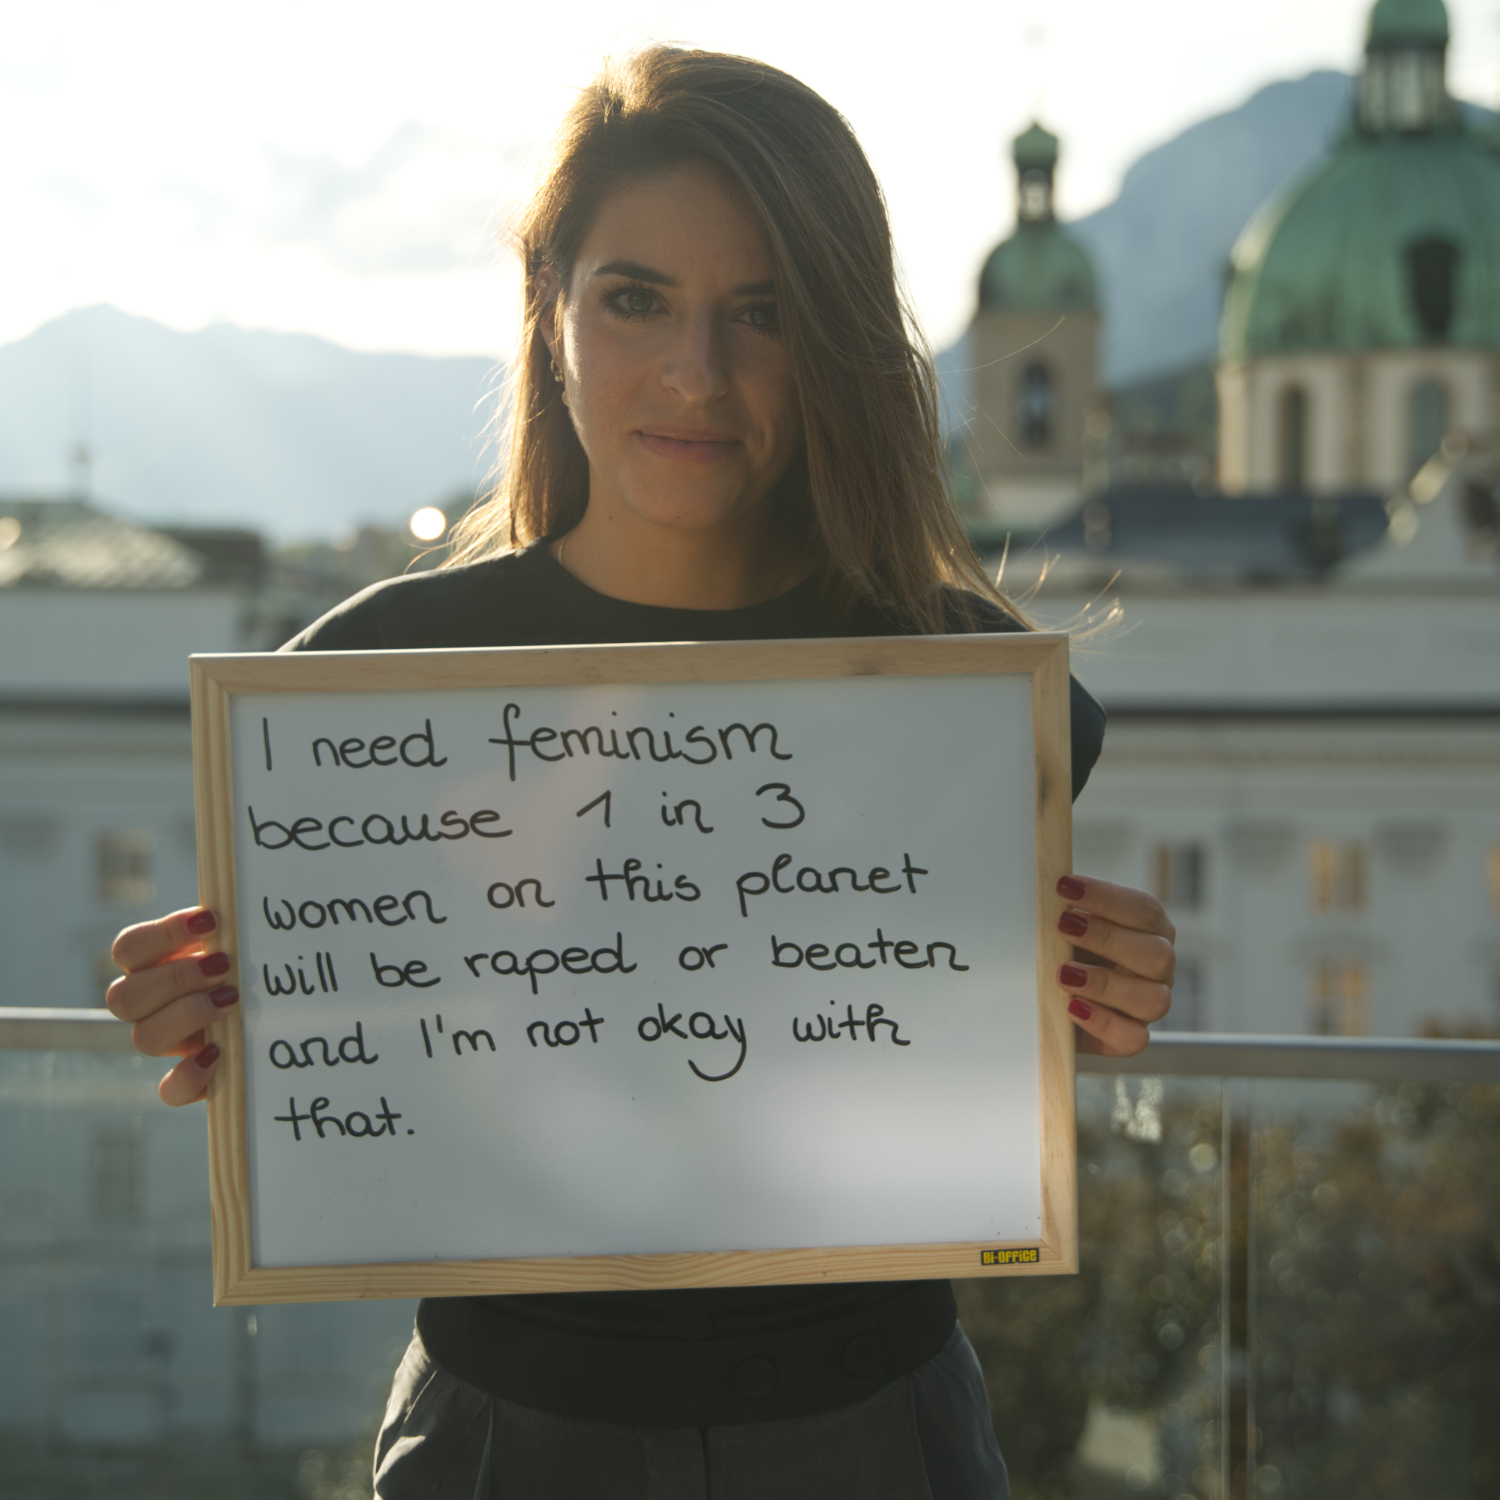 I need feminism because